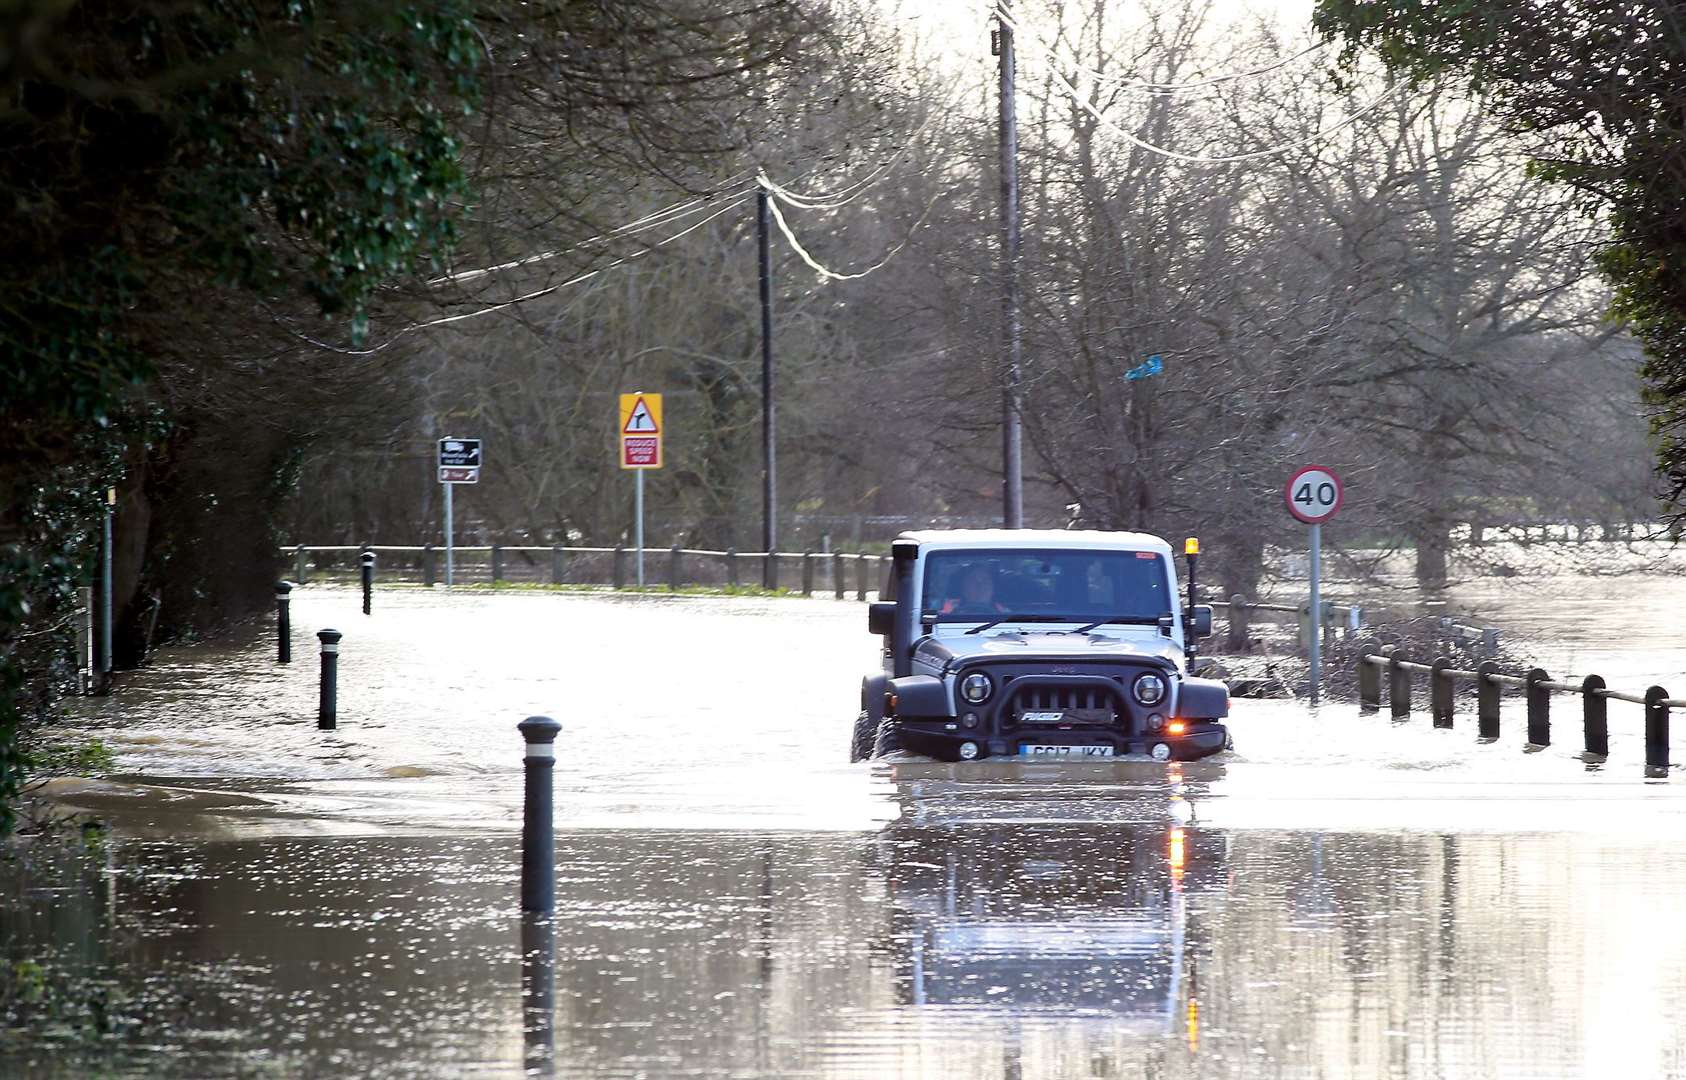 Flooding in Yalding in 2021